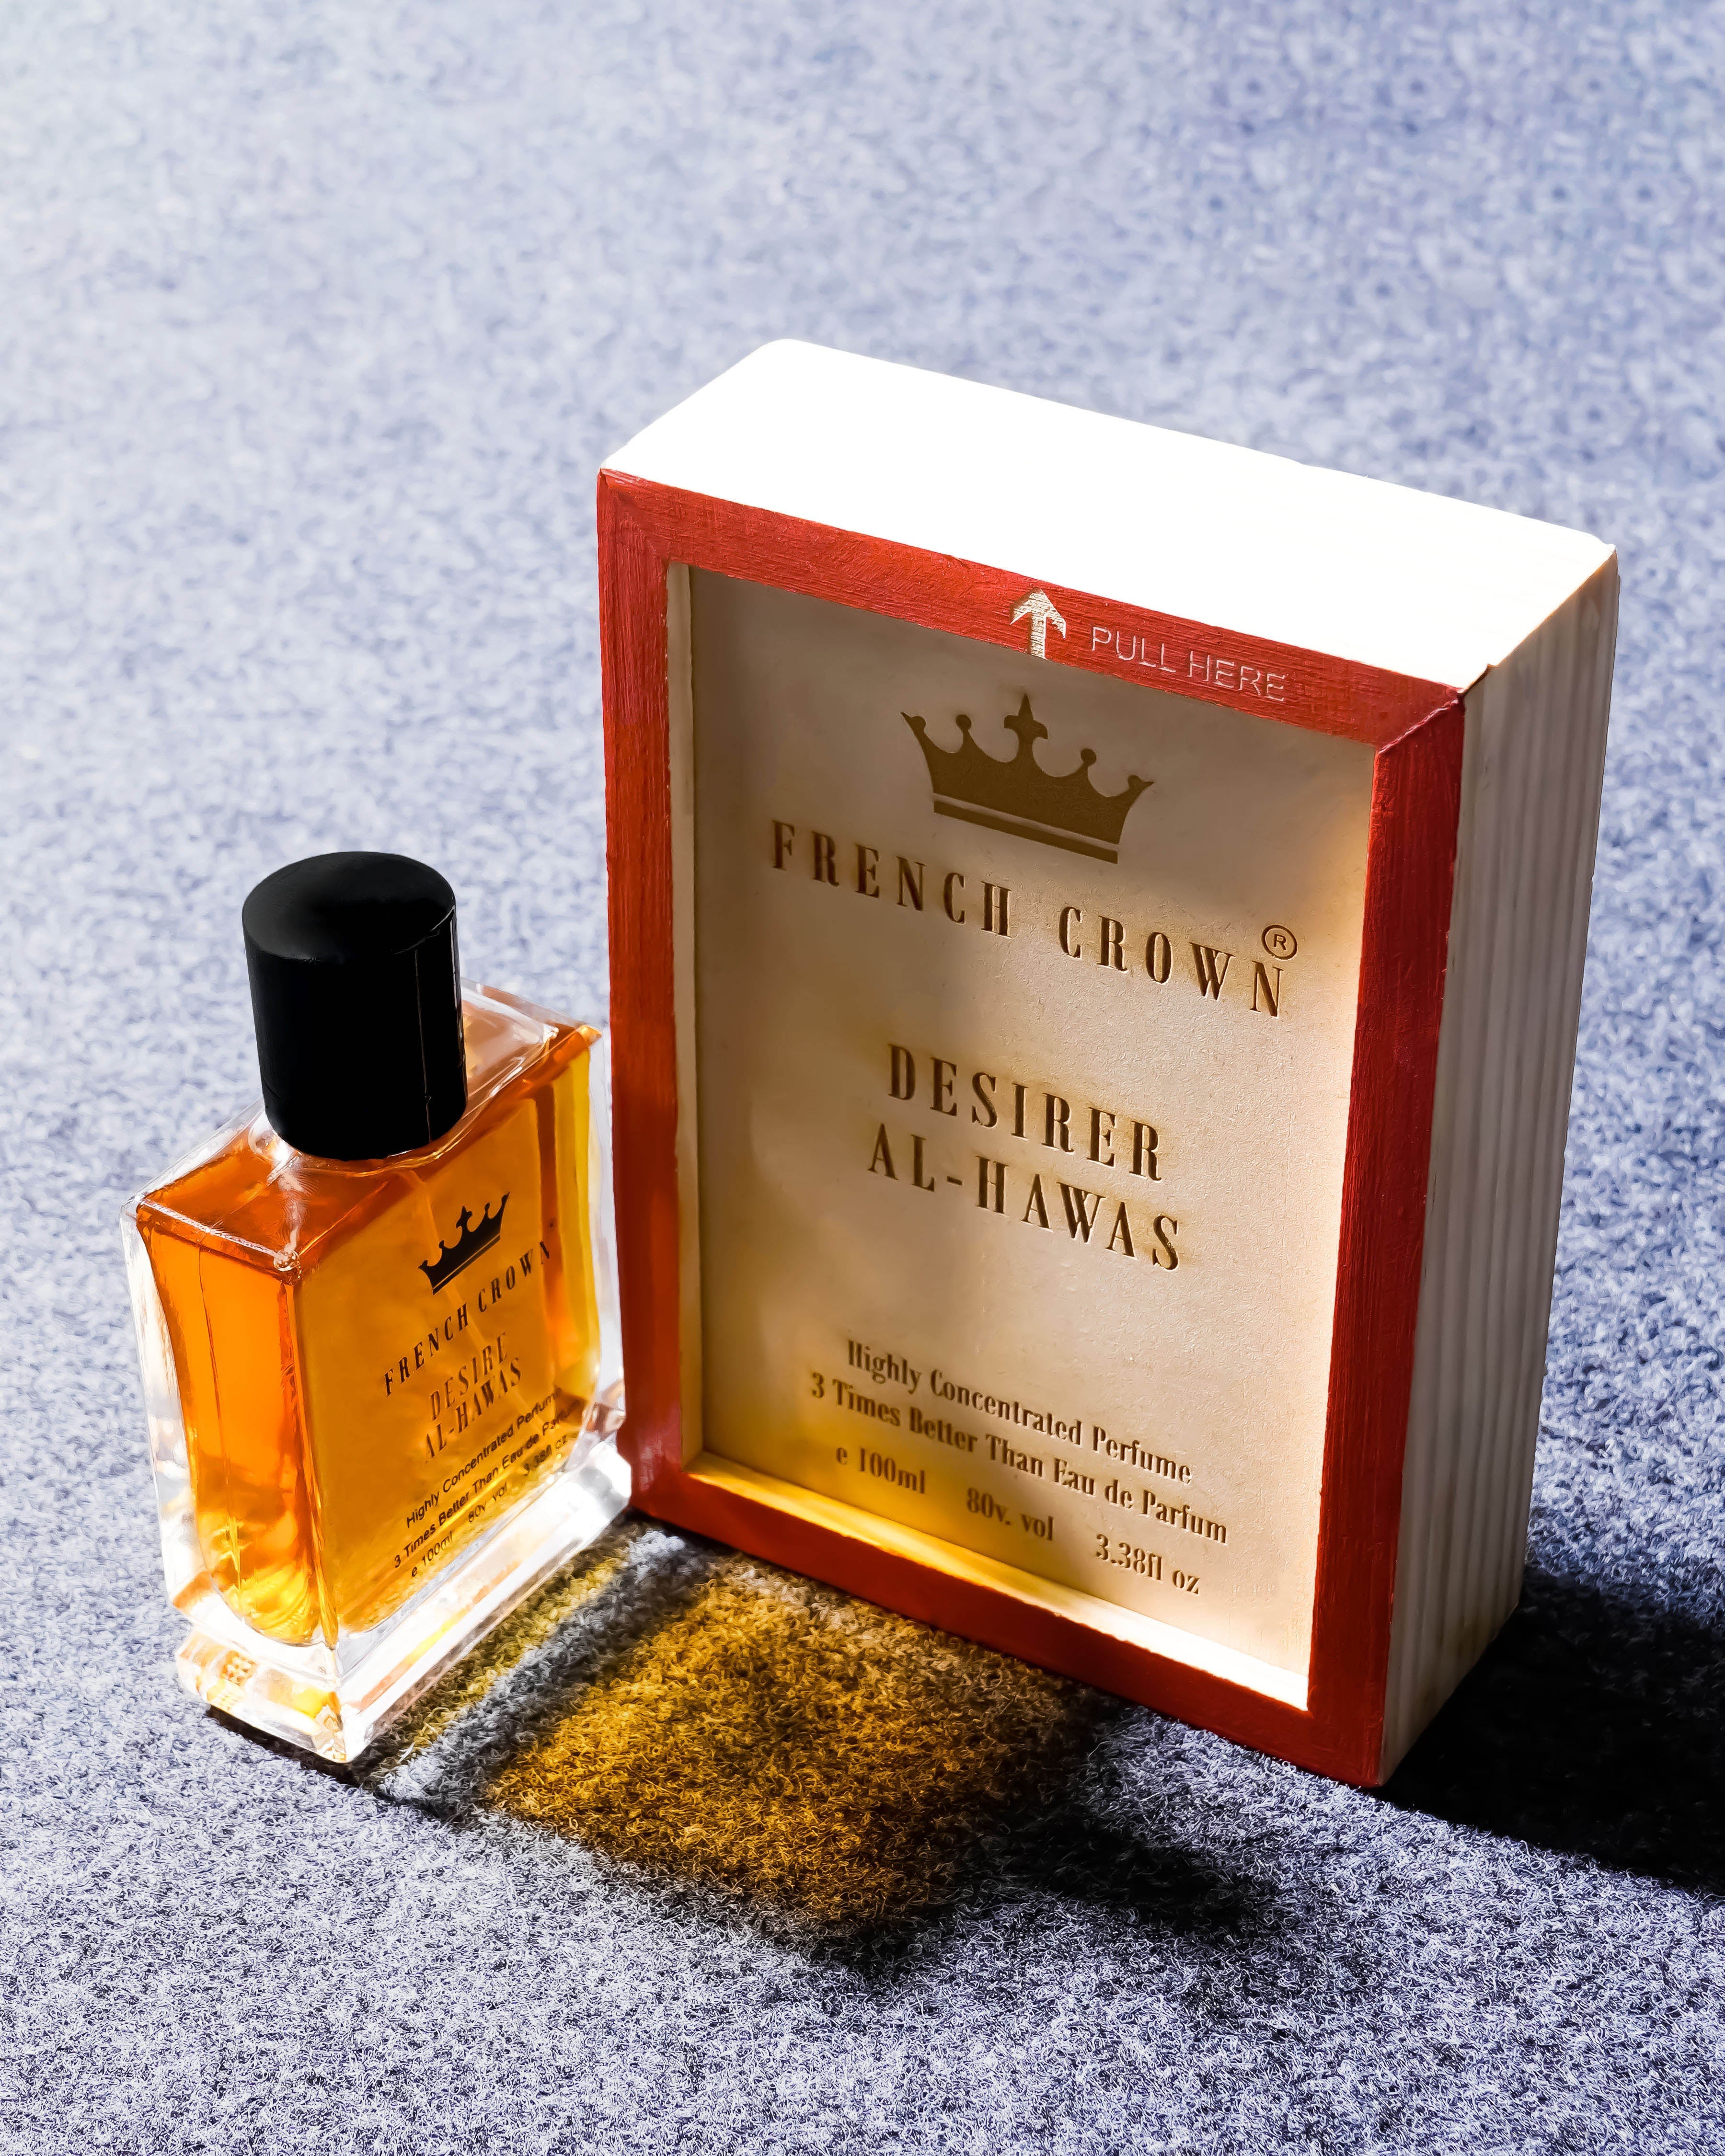 French Crown Desired Al-Hawas Perfume